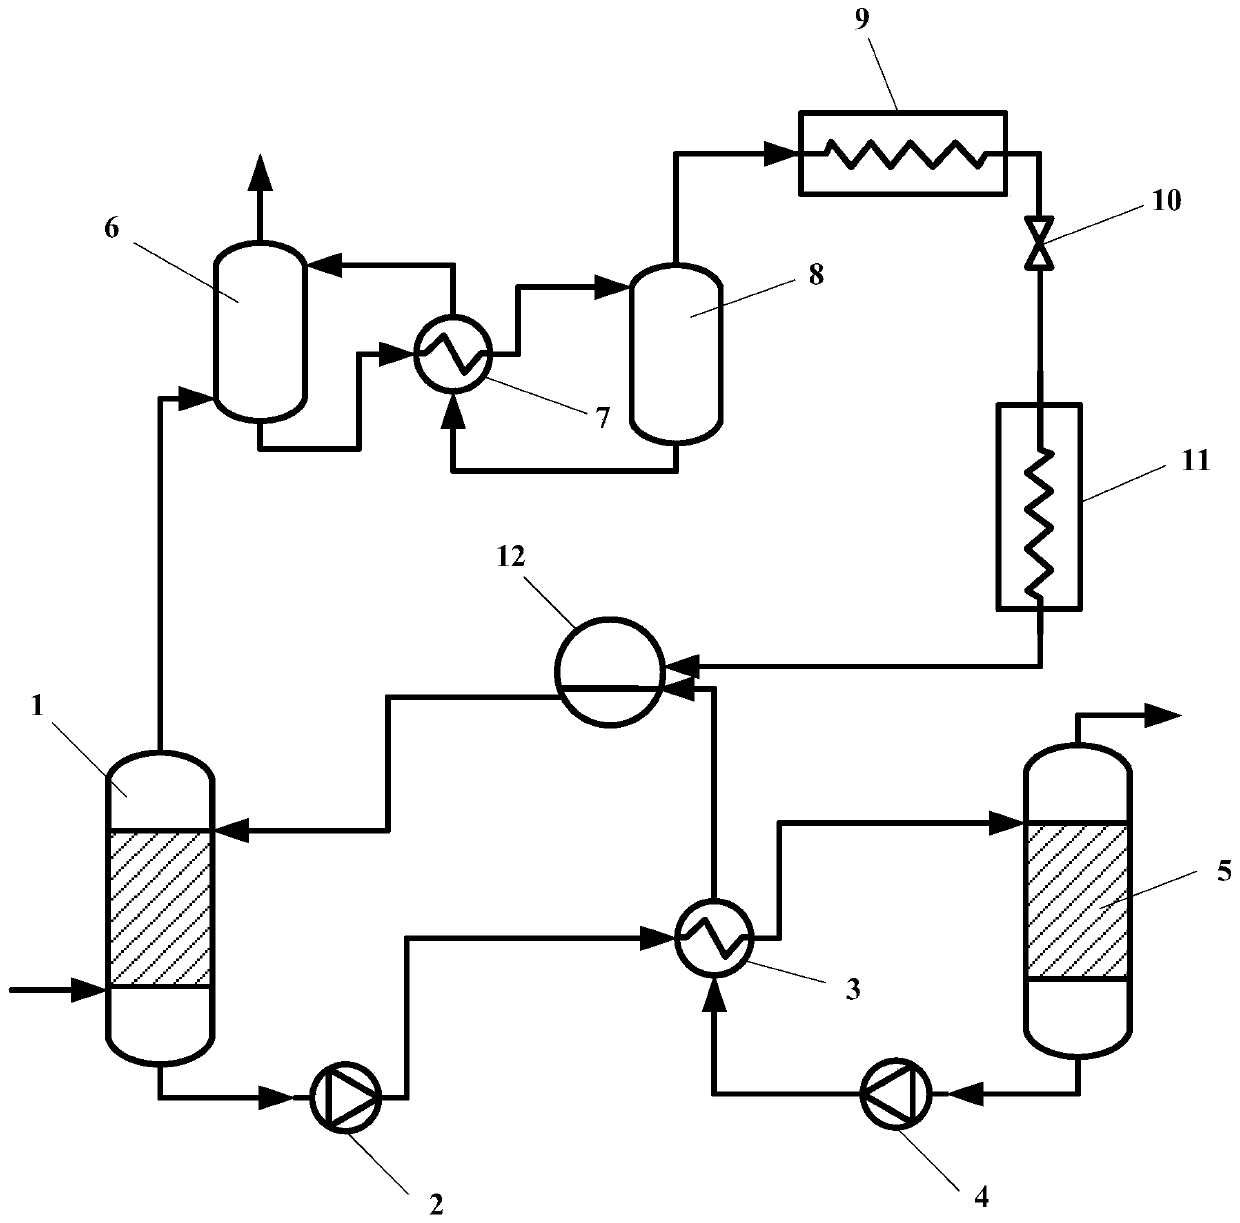 Ammonia-method carbon capture system based on ionic liquid refrigeration cycle